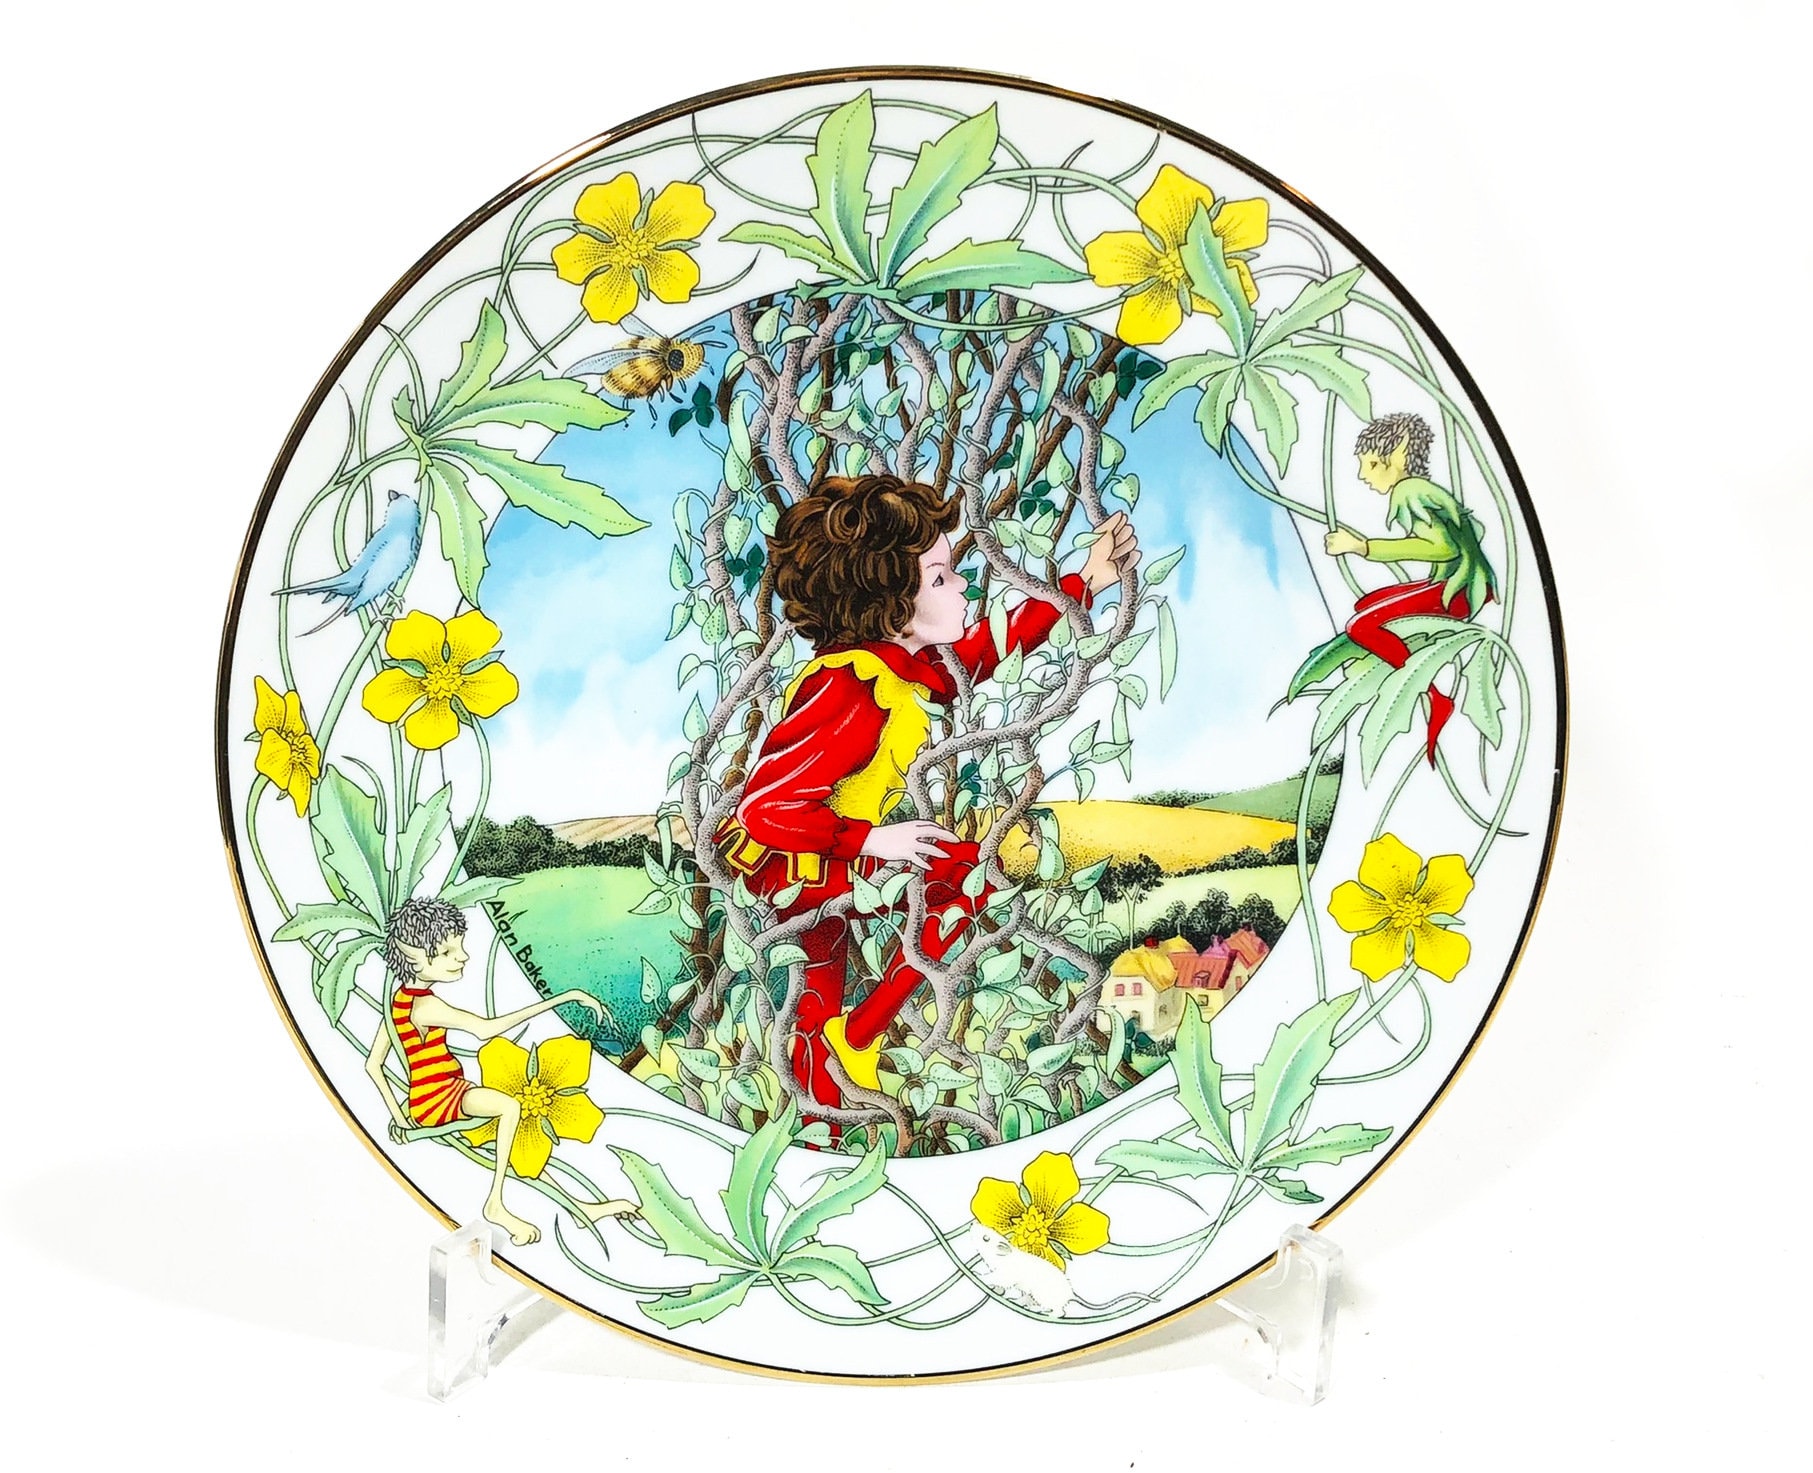 Limited Edition Sleeping Beauty June Vintage Fairy Tale Calendar Plate Artist 1983 by Royal Cornwall Alan Baker